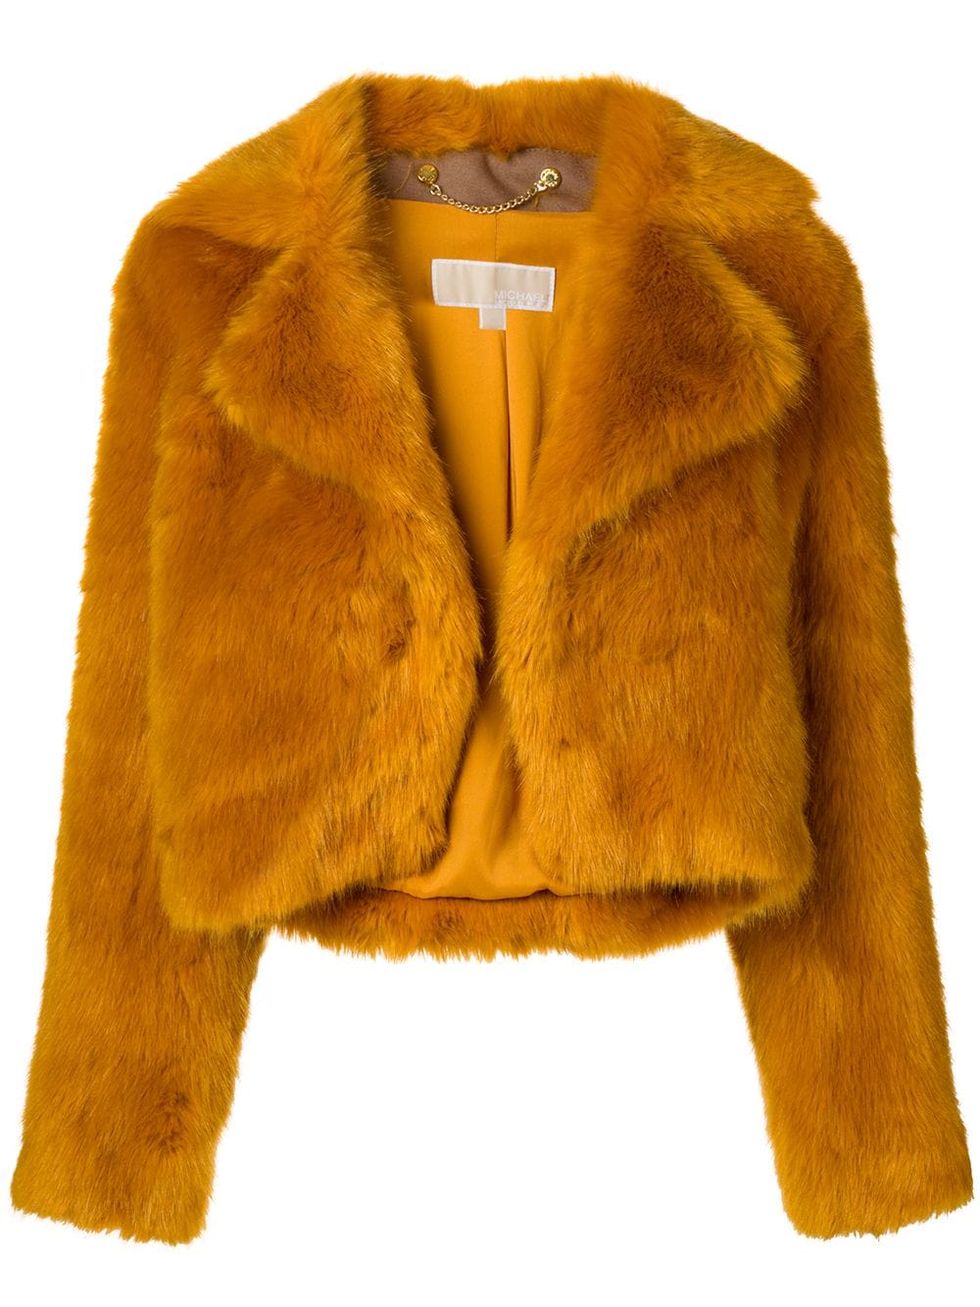 20 Best Faux Fur Jackets For Women 2018 - Fake Fur Coats for Winter